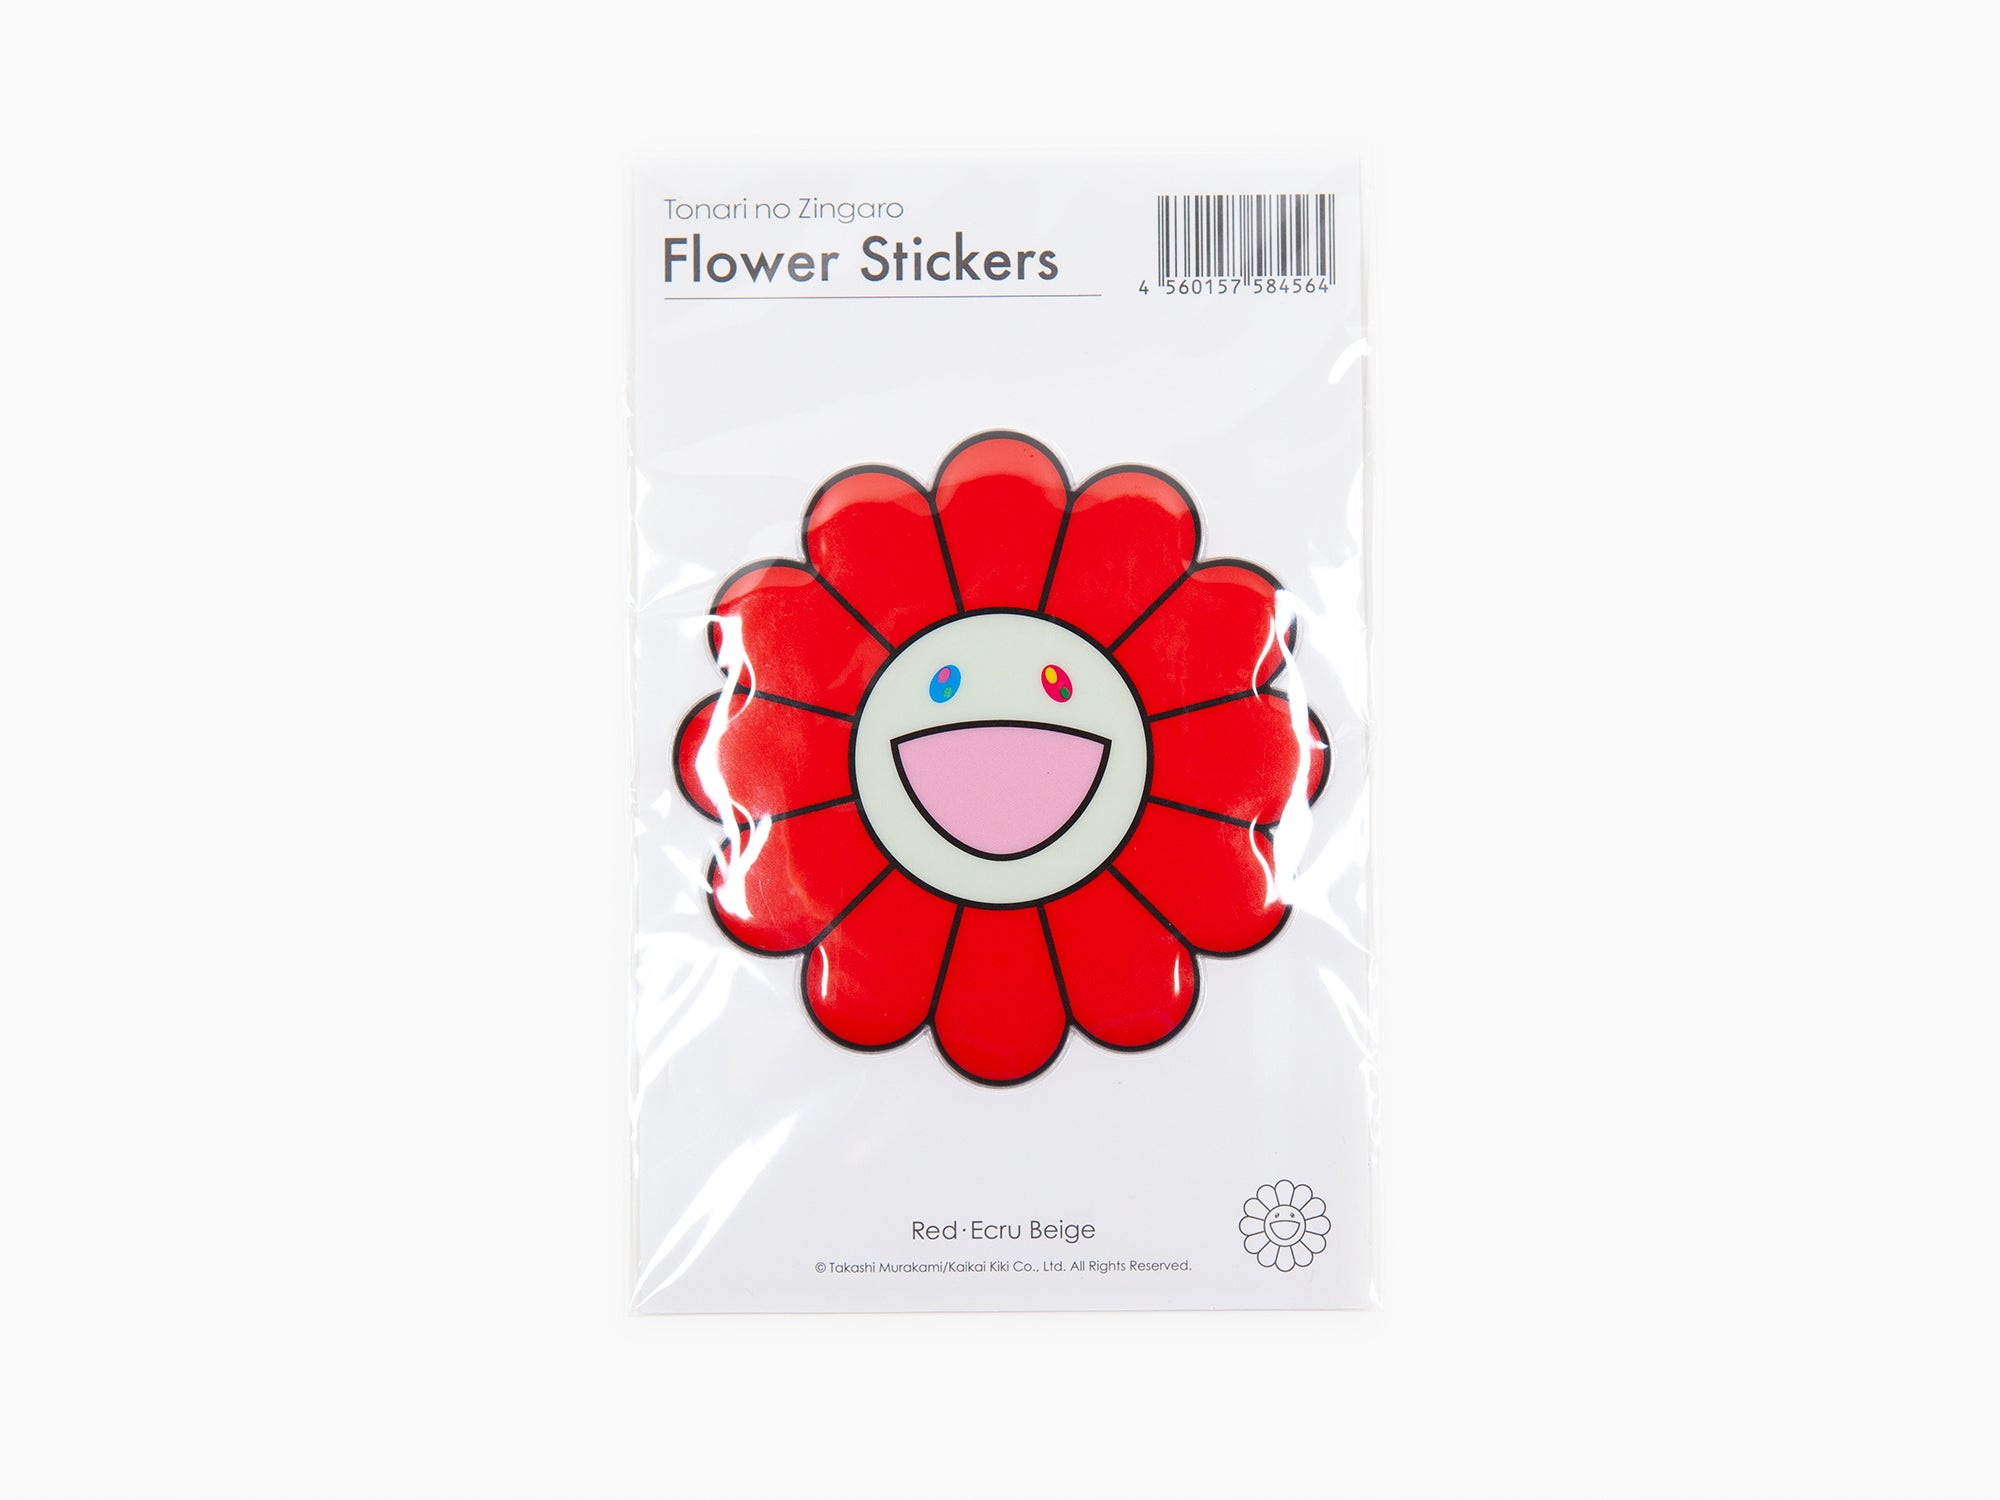 Facepalm emoji) - the packaging for Takashi Murakami x Porter ”BS